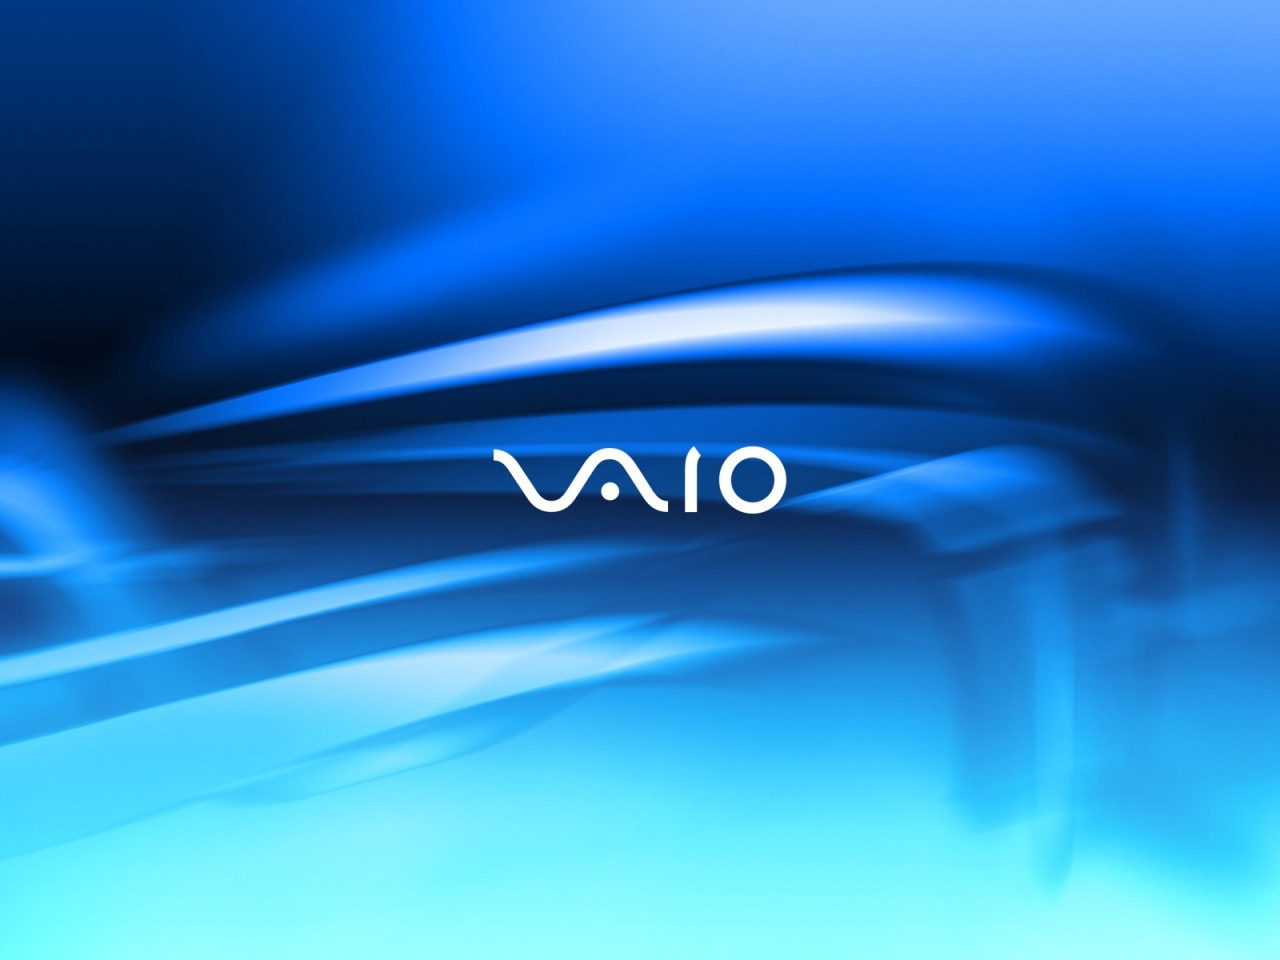 Vaio light blue for 1280 x 960 resolution